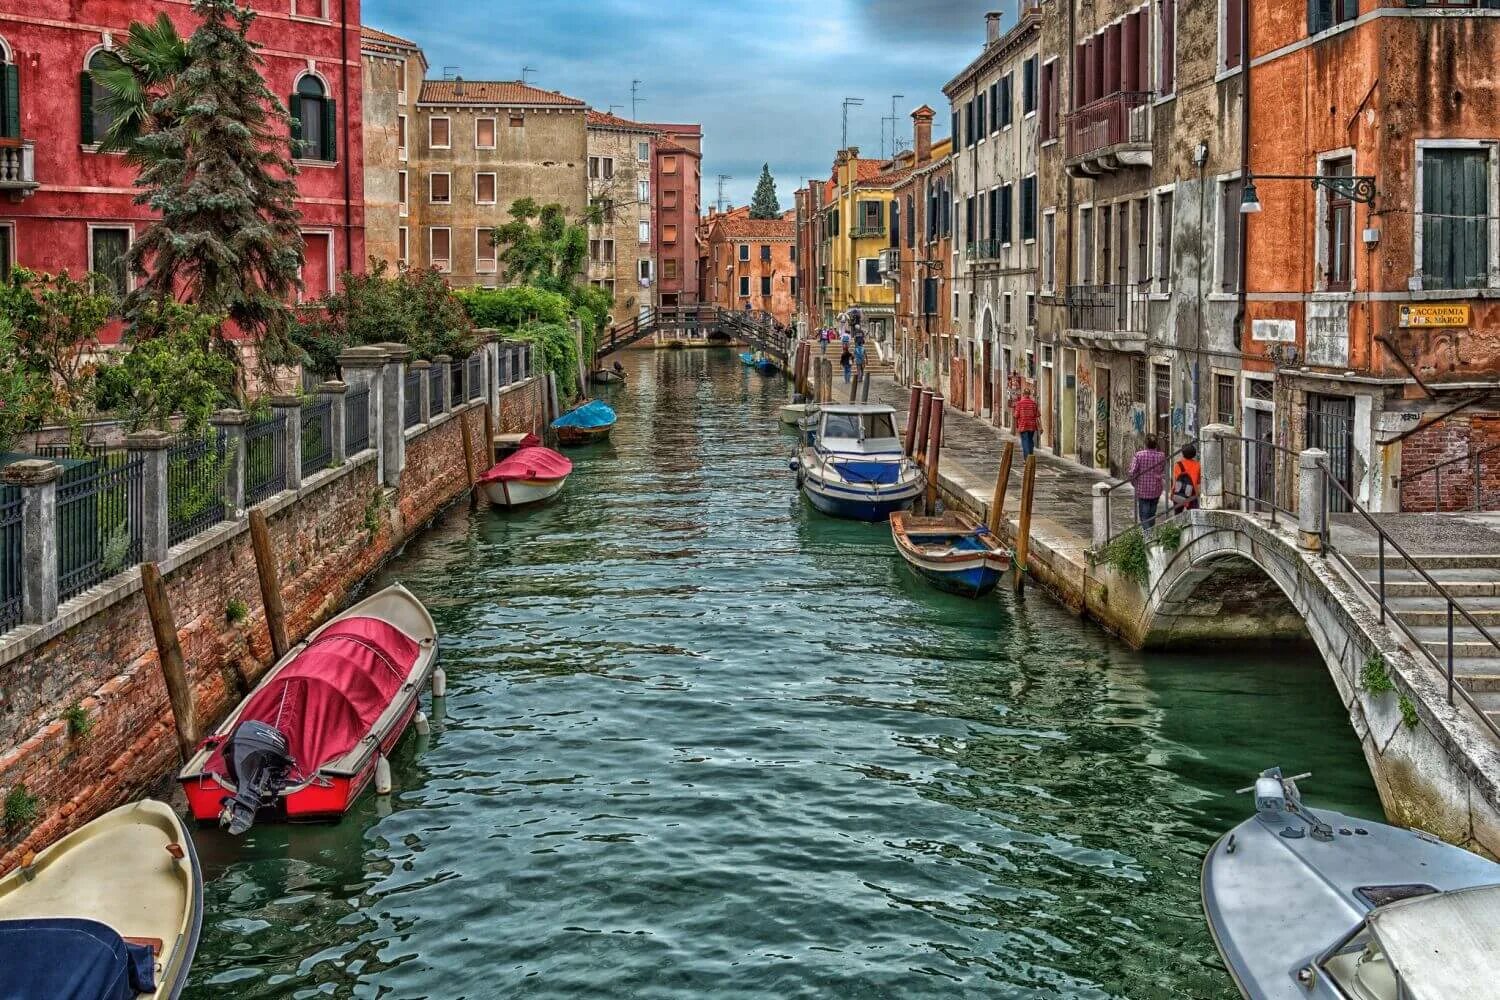 Италия город Венеция (Venice). Grand canal Венеция. Венеция Италия Гранд канал. Венис Италия. Река в венеции